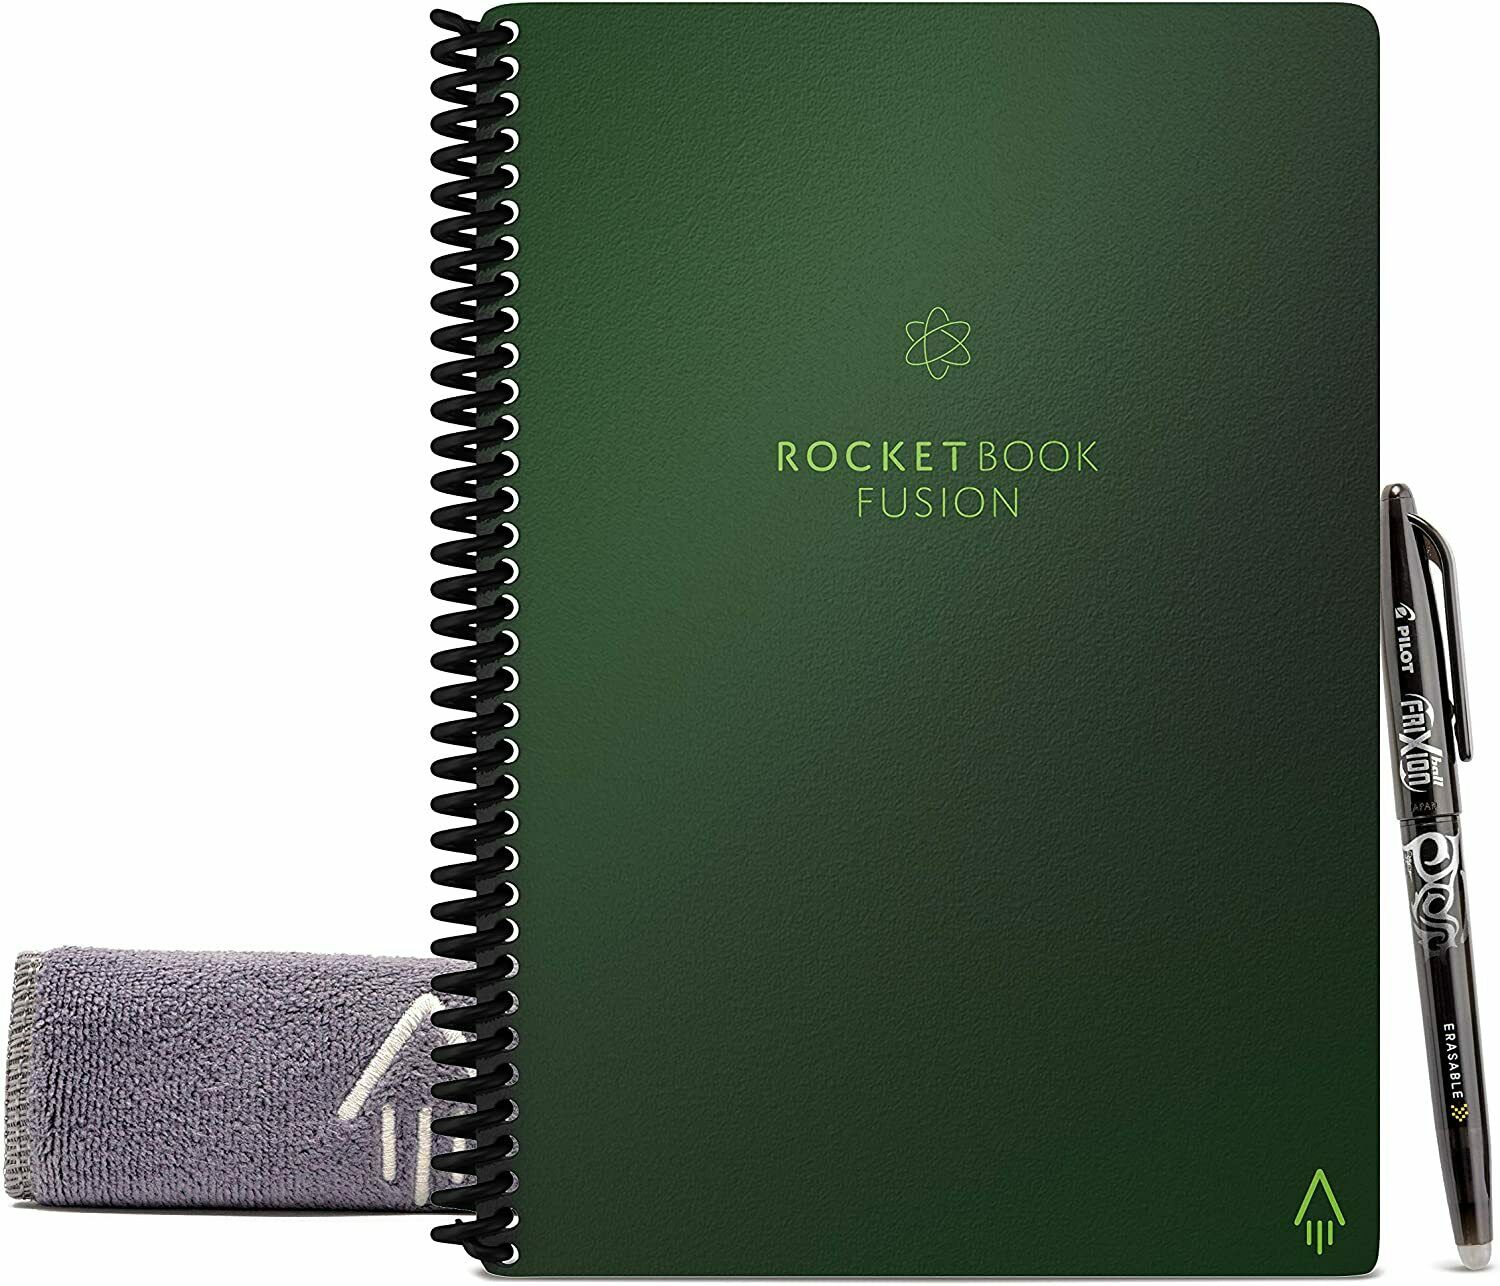 Rocketbook Fusion Smart Reusable Notebook Pen & Microfiber Cloth Executive Size